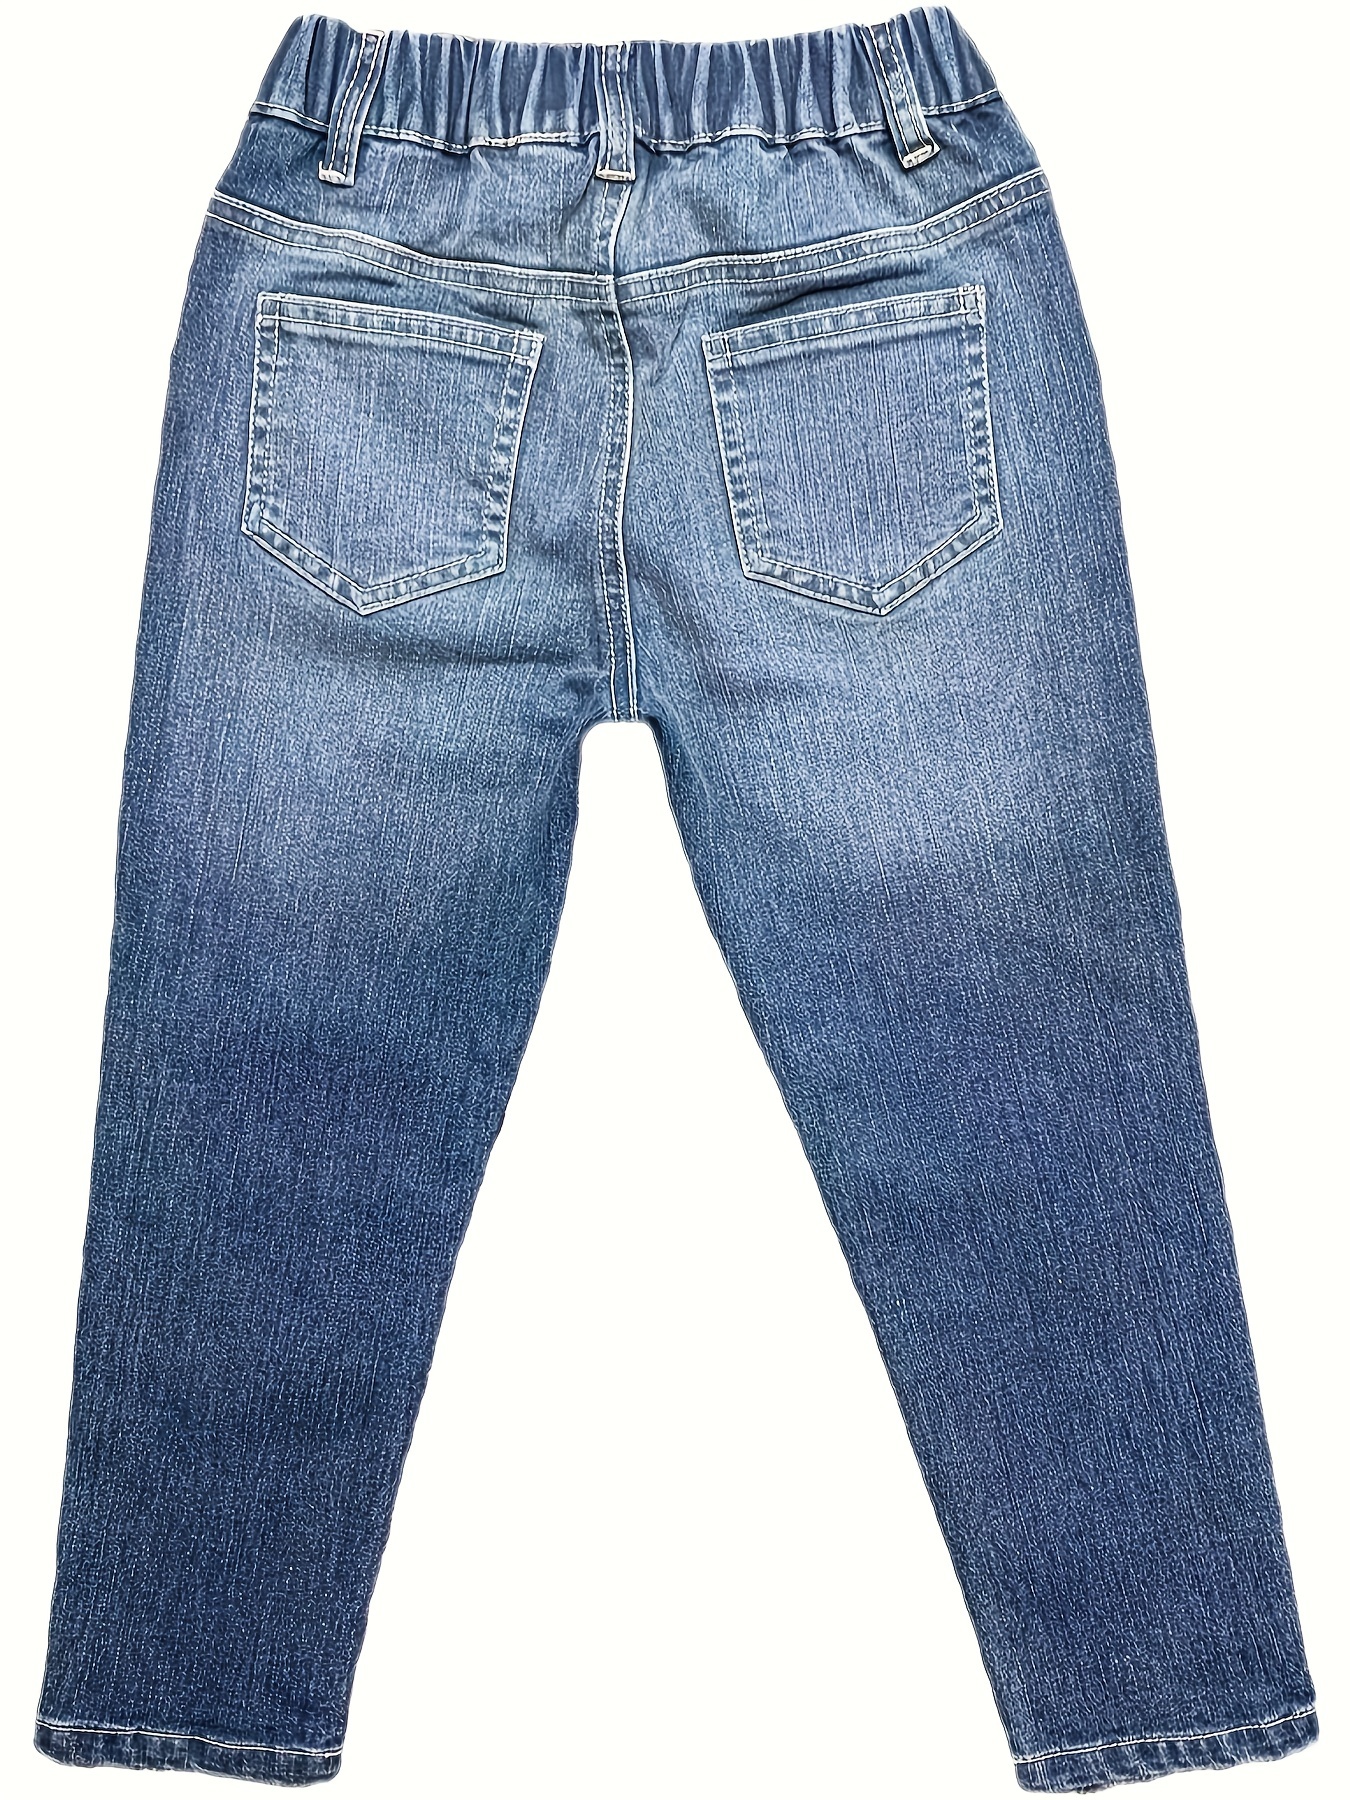 Girls Baggy Jeans Spring Fall Children Denim Pants Fashion Kids